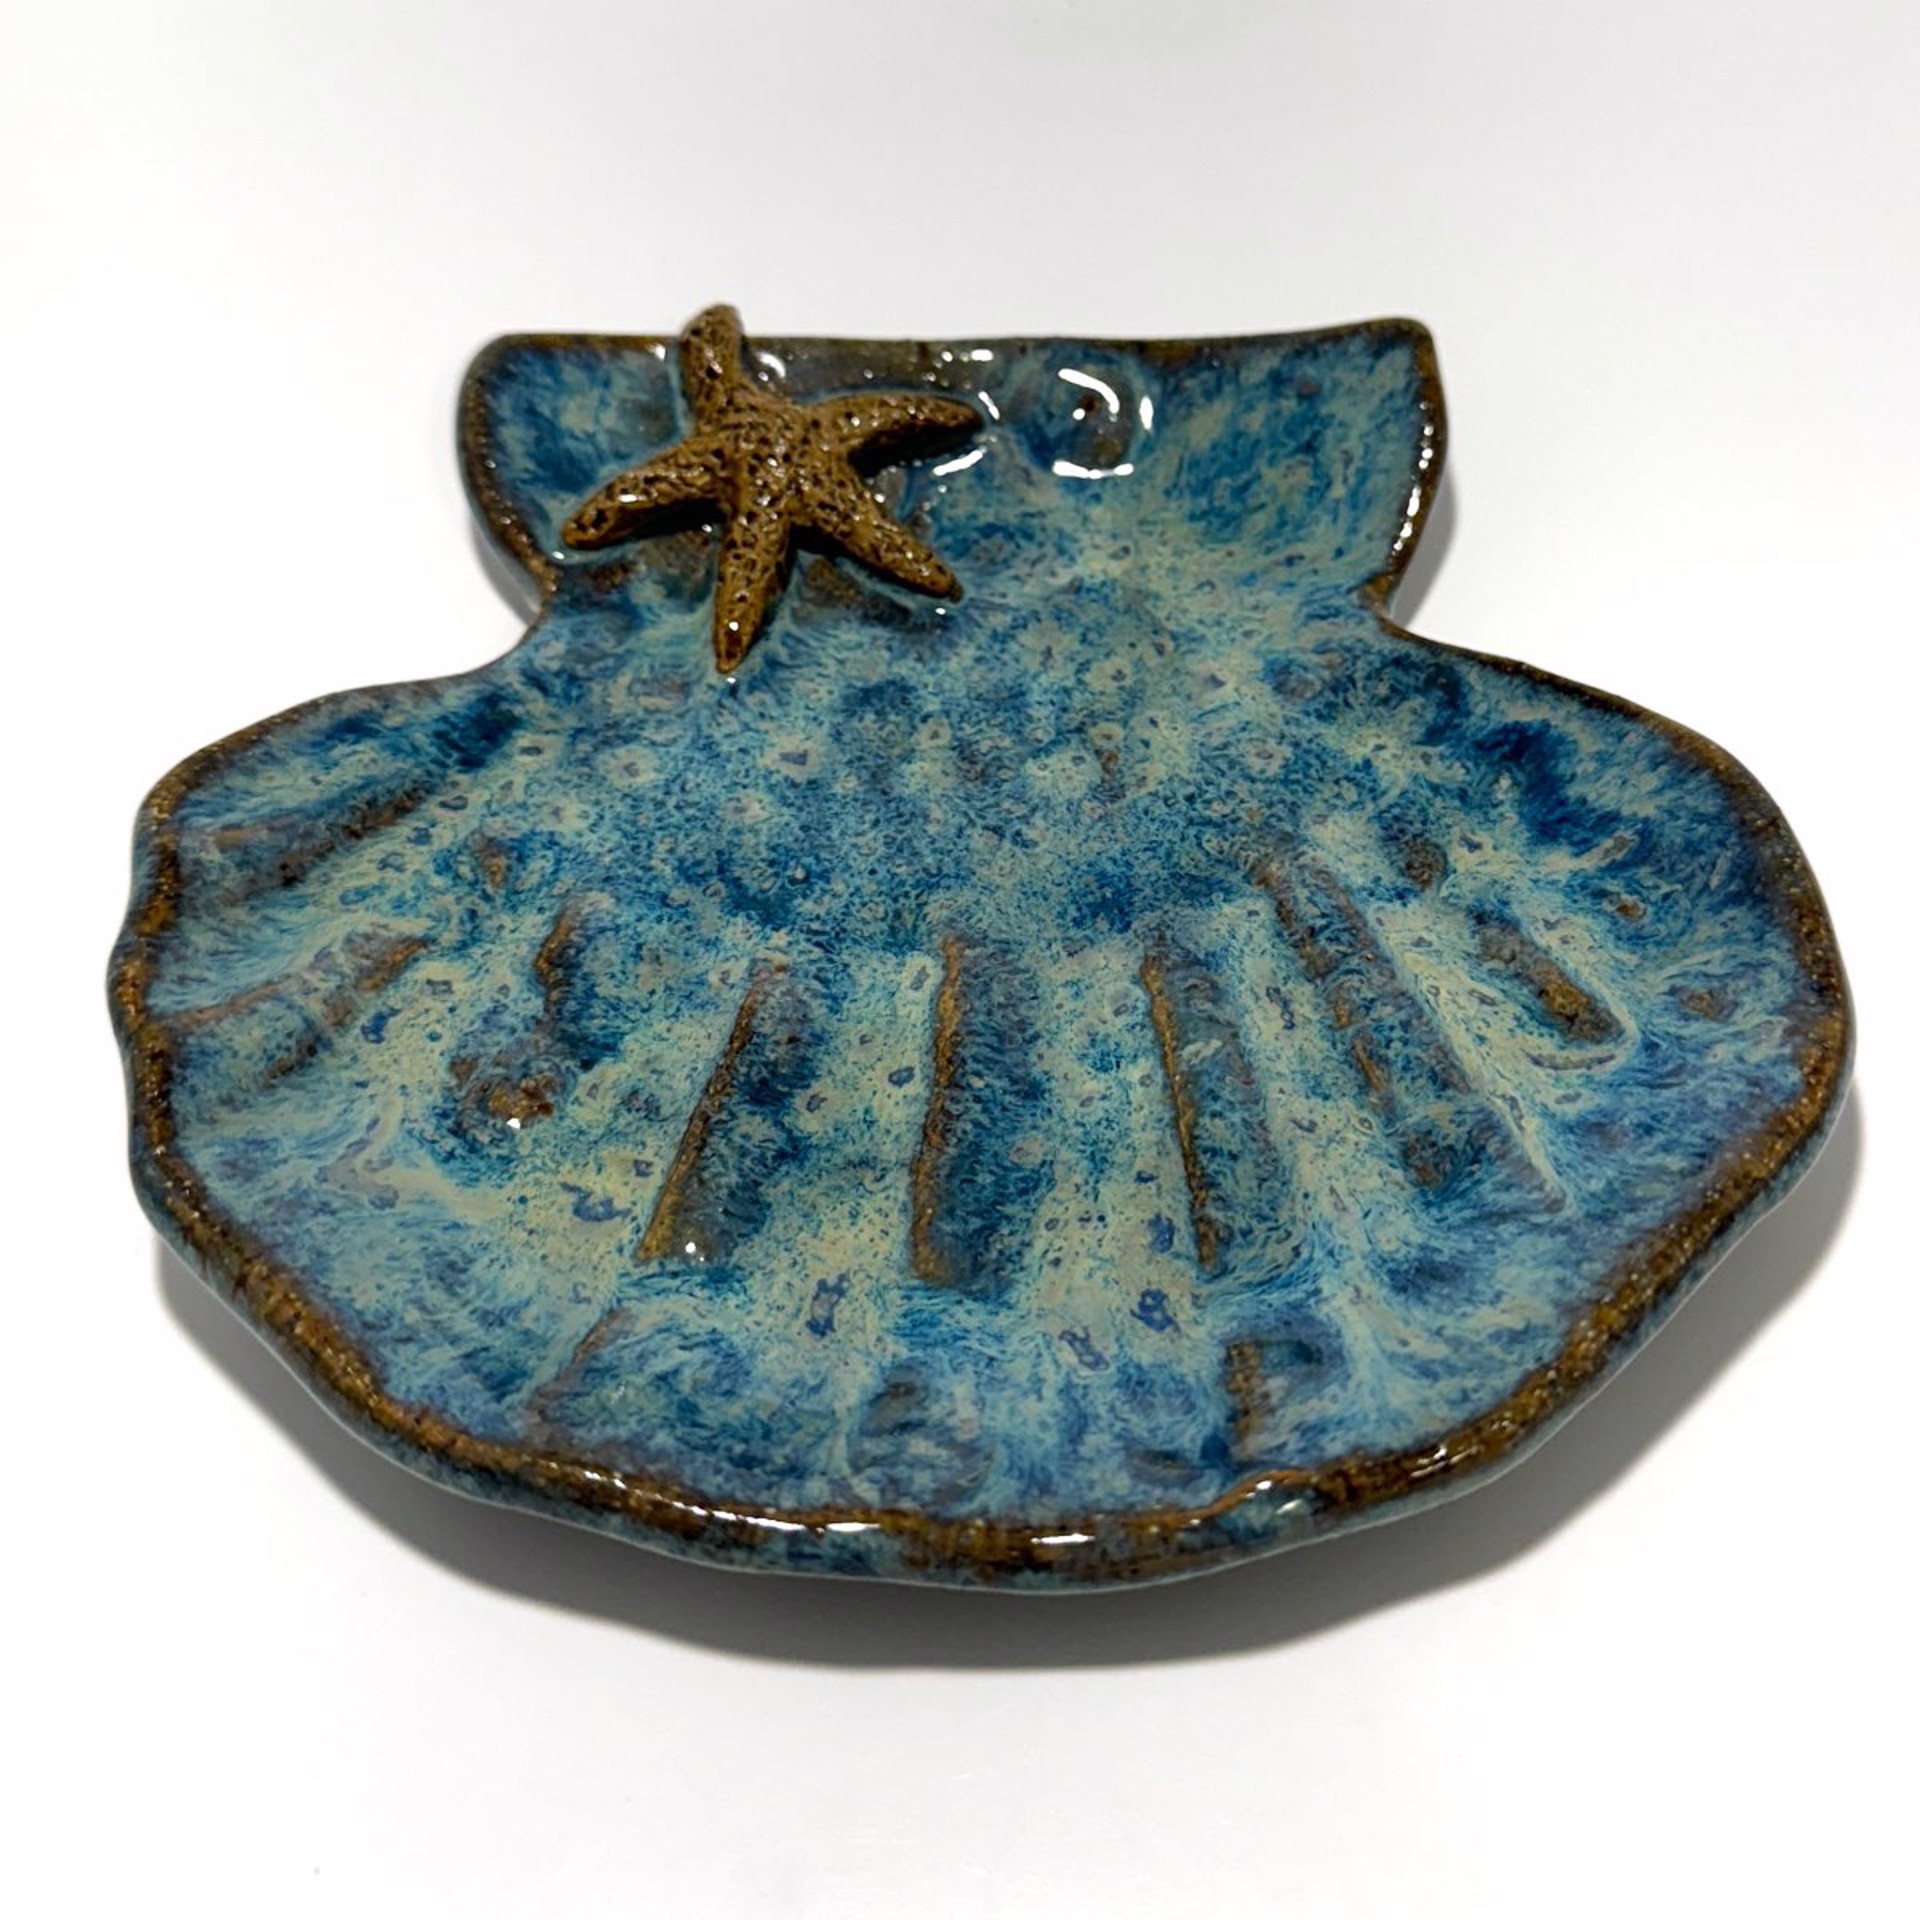 Shell Dish with Starfish (Blue Glaze) LG24-1232 by Jim & Steffi Logan